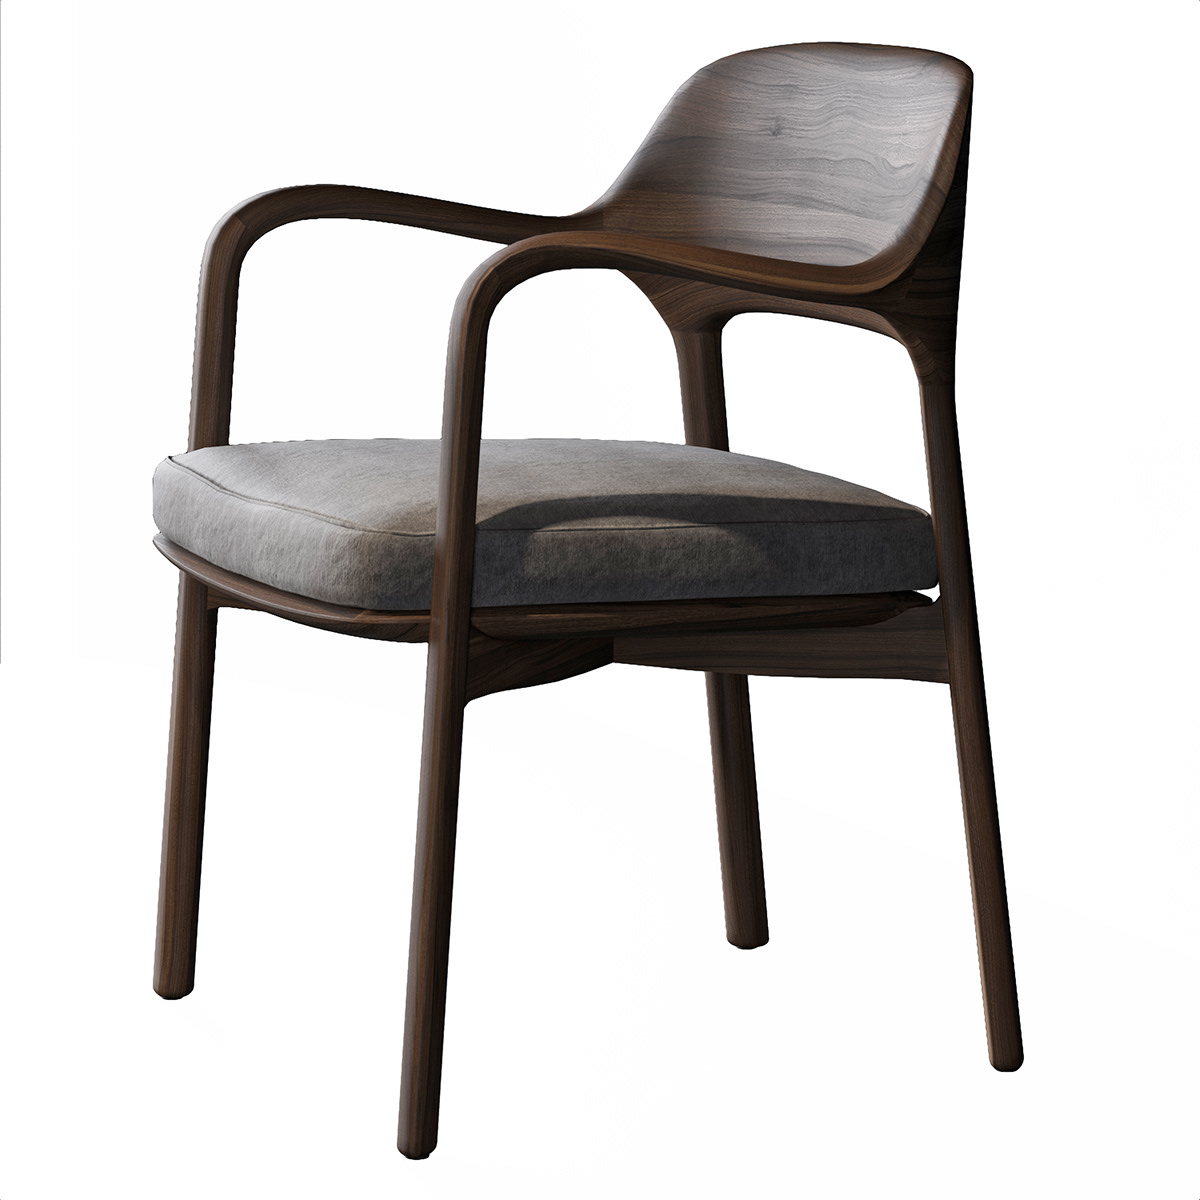 3D 3ds max CGI chair furniture Interior italia Render visualization wood